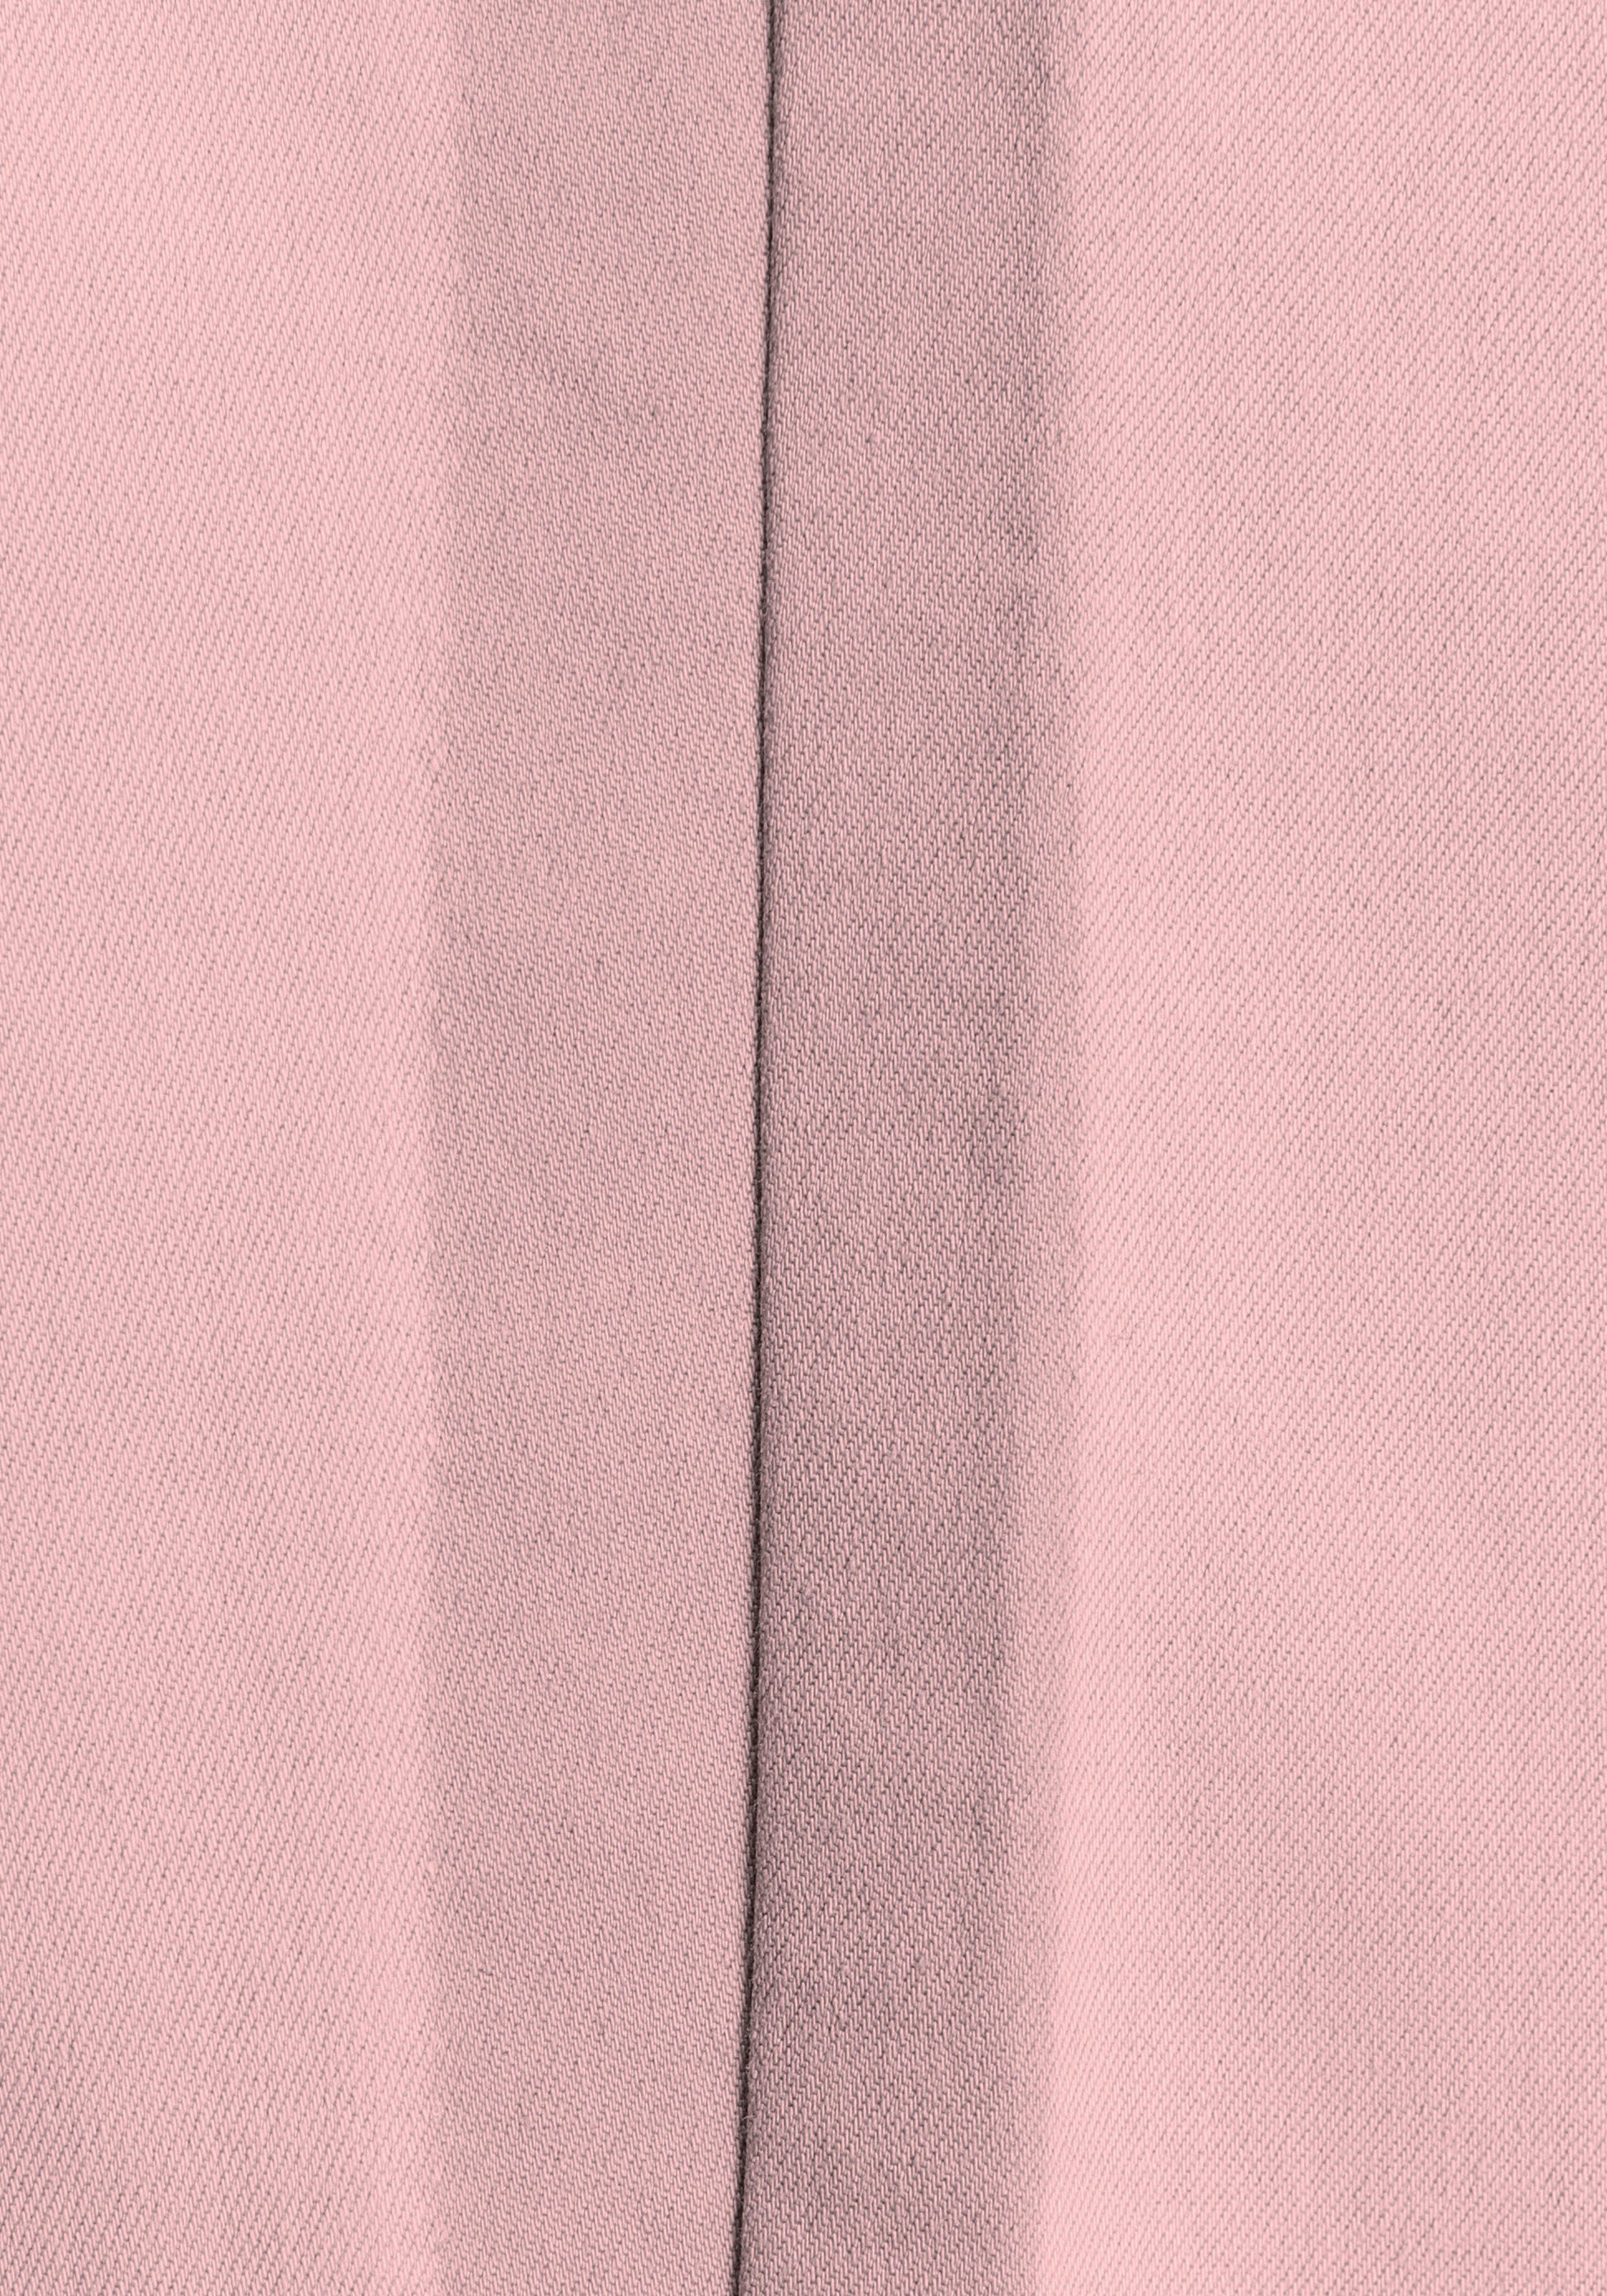 Arizona mit rosa Stretch seitlichem Ultra Streifen Skinny-fit-Jeans High Waist